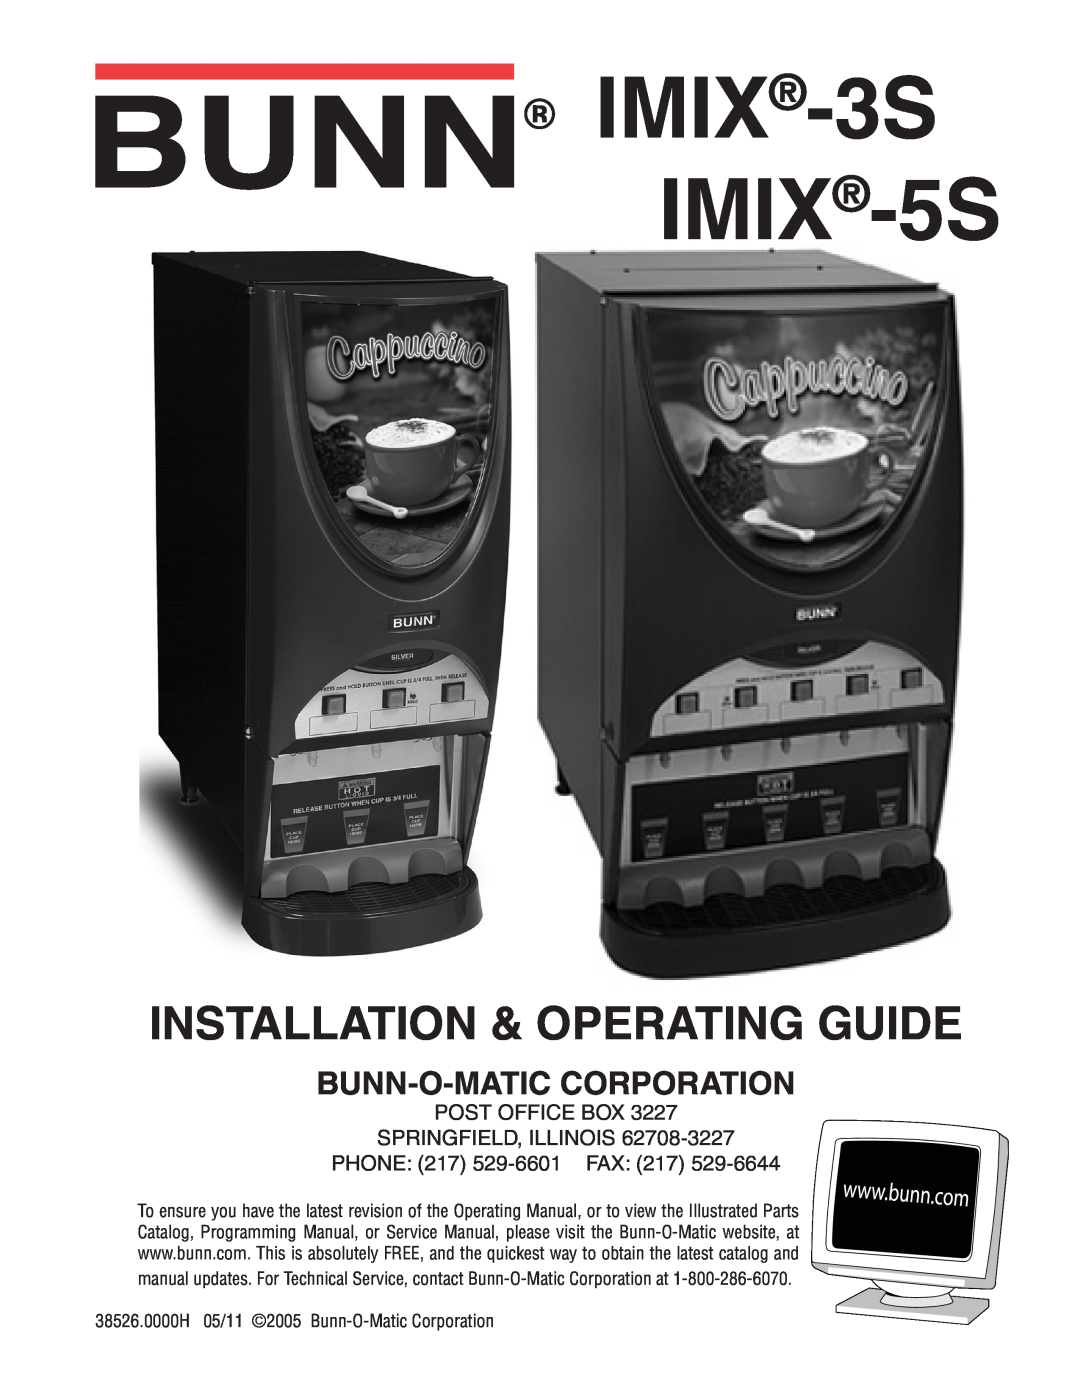 Bunn manual IMIX-3S IMIX-5S, Installation & Operating Manual, PHONE 217 529-6601 FAX 